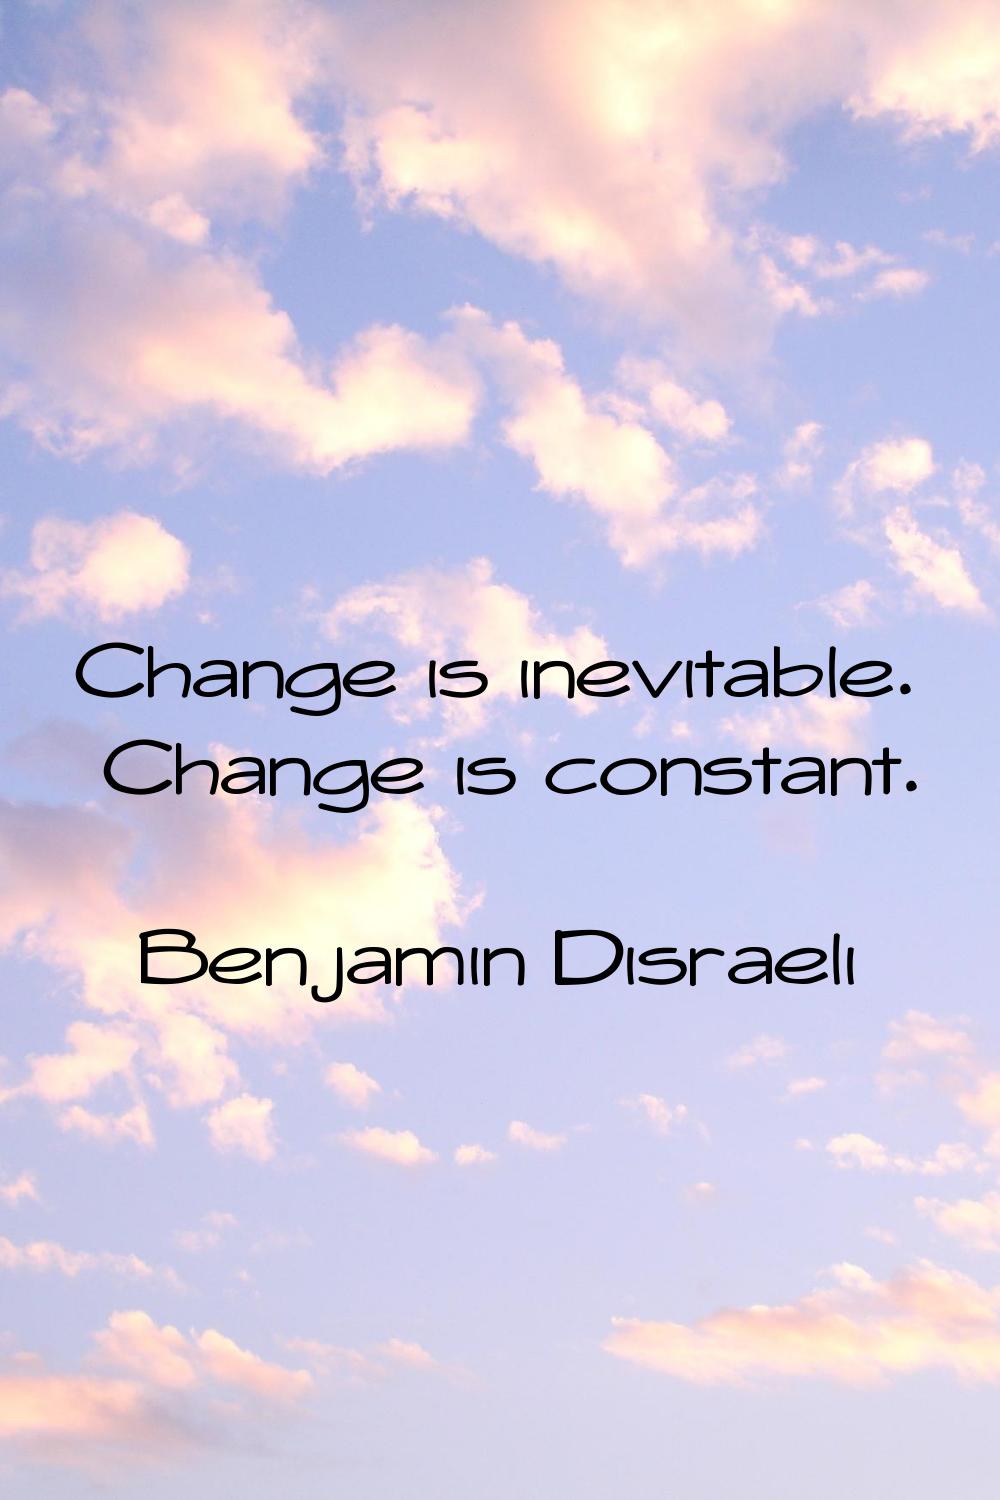 Change is inevitable. Change is constant.